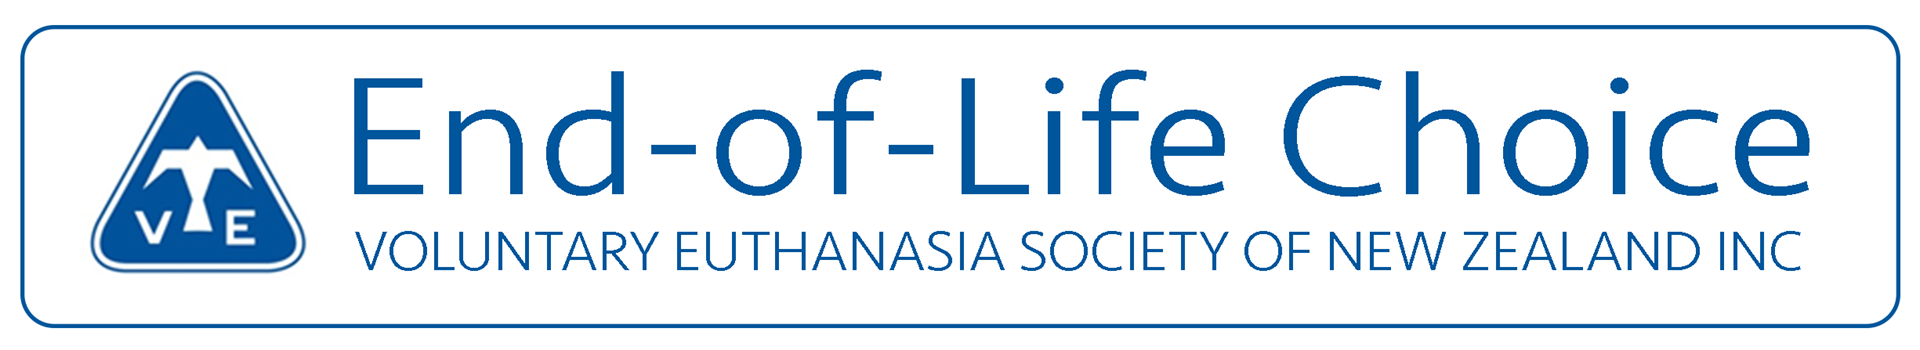 End-of-Life Choice - VOLUNTARY EUTHANASIA SOCIETY OF NEW ZEALAND INC 